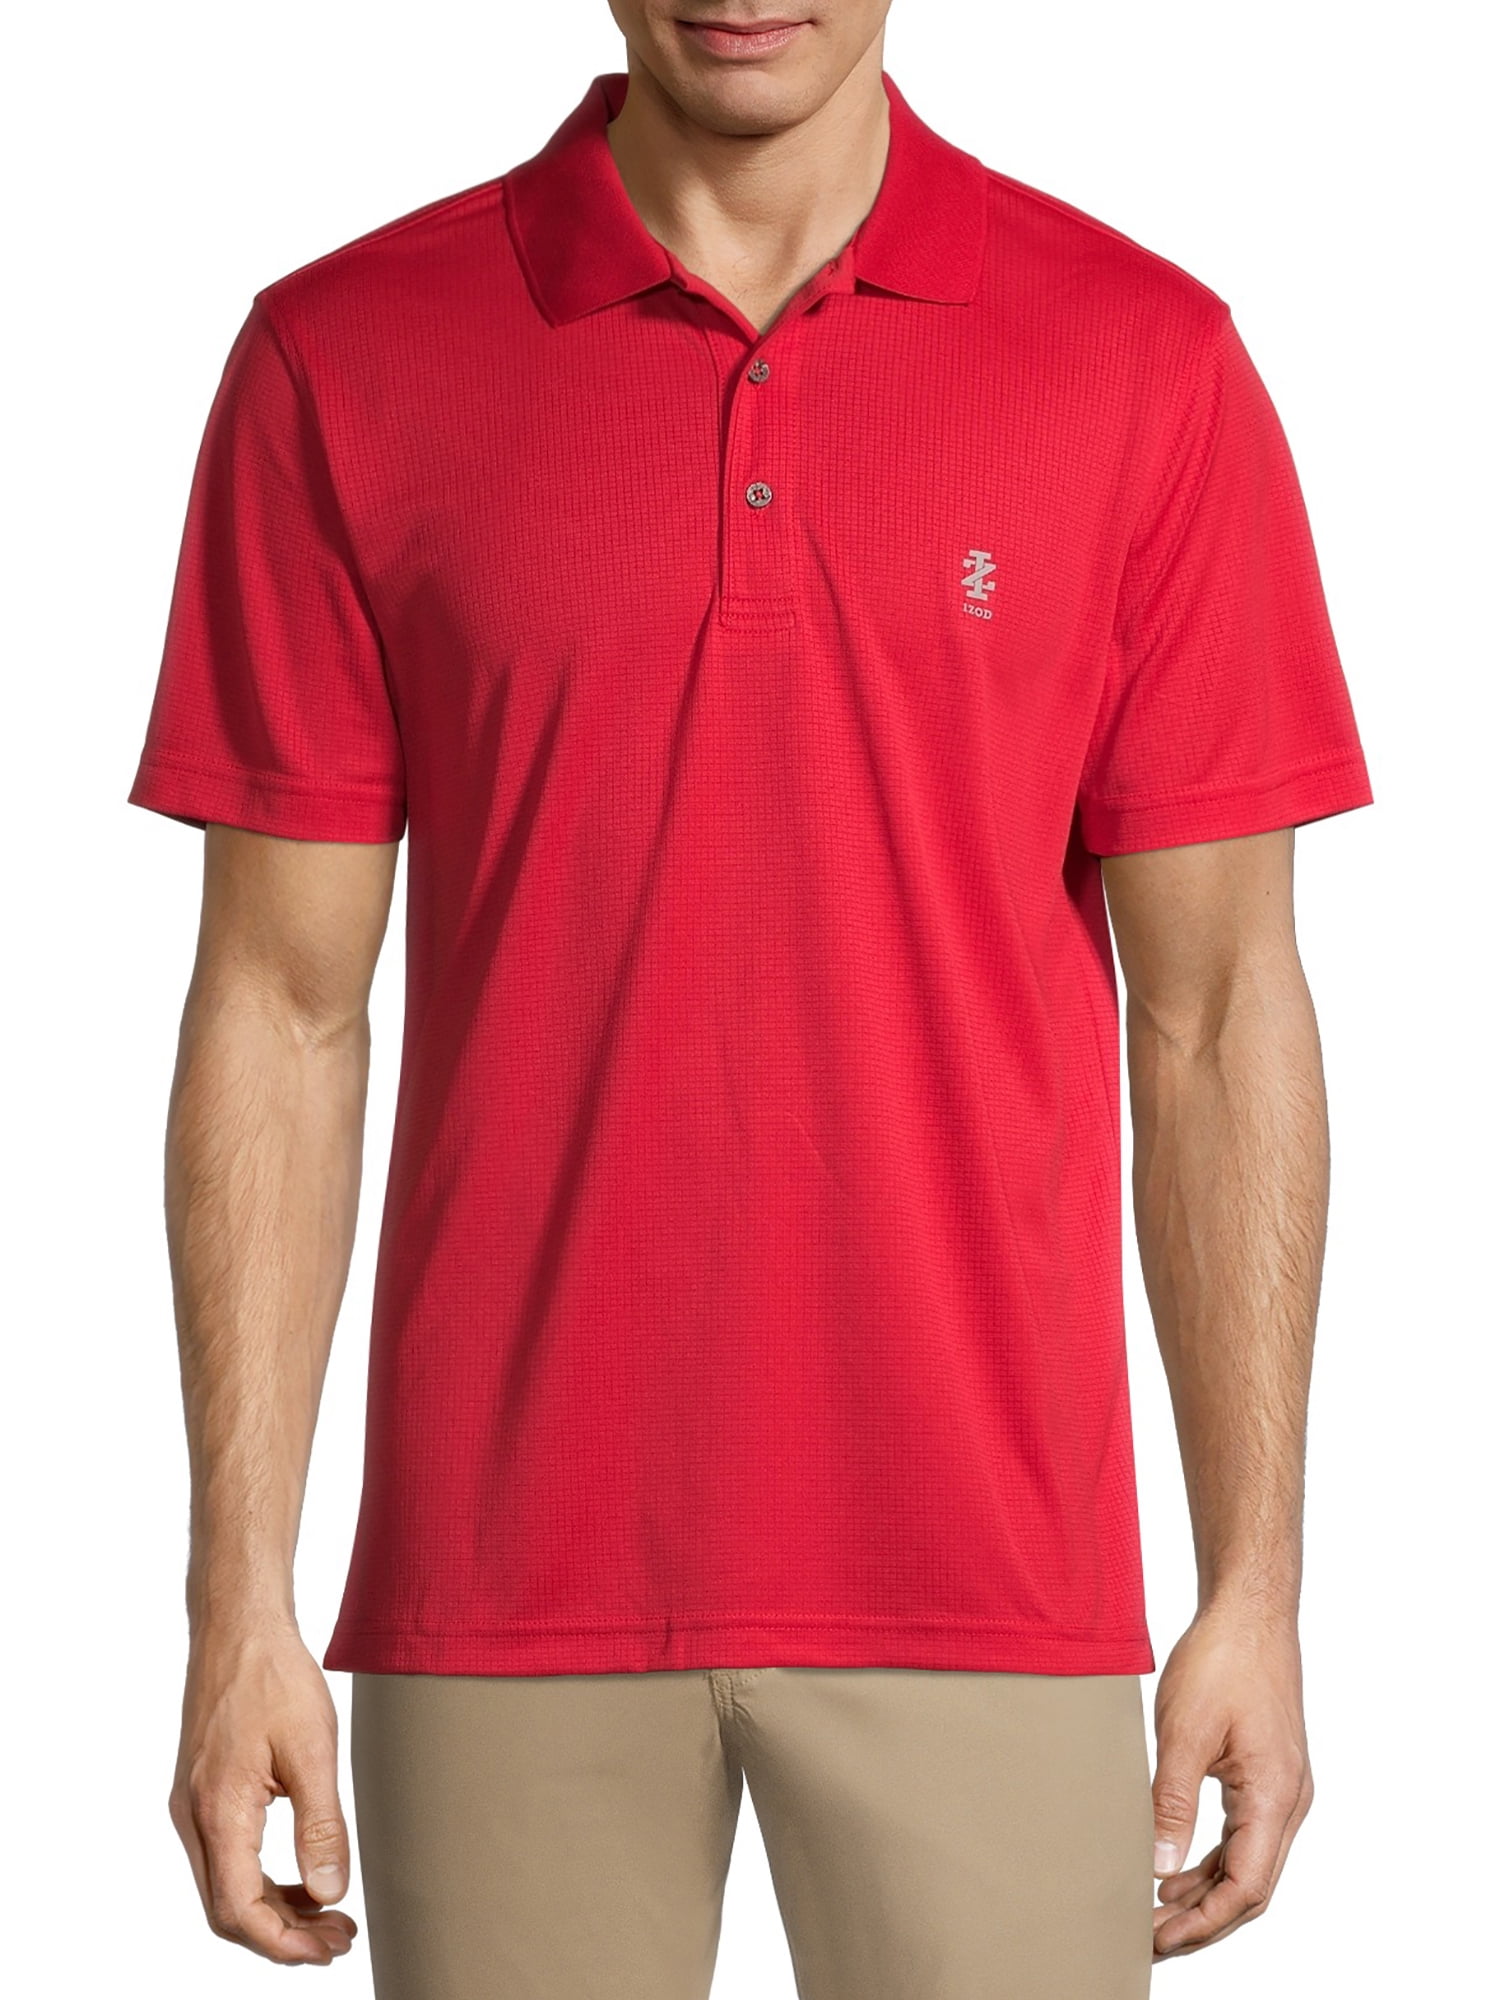 mens golf shirts on sale